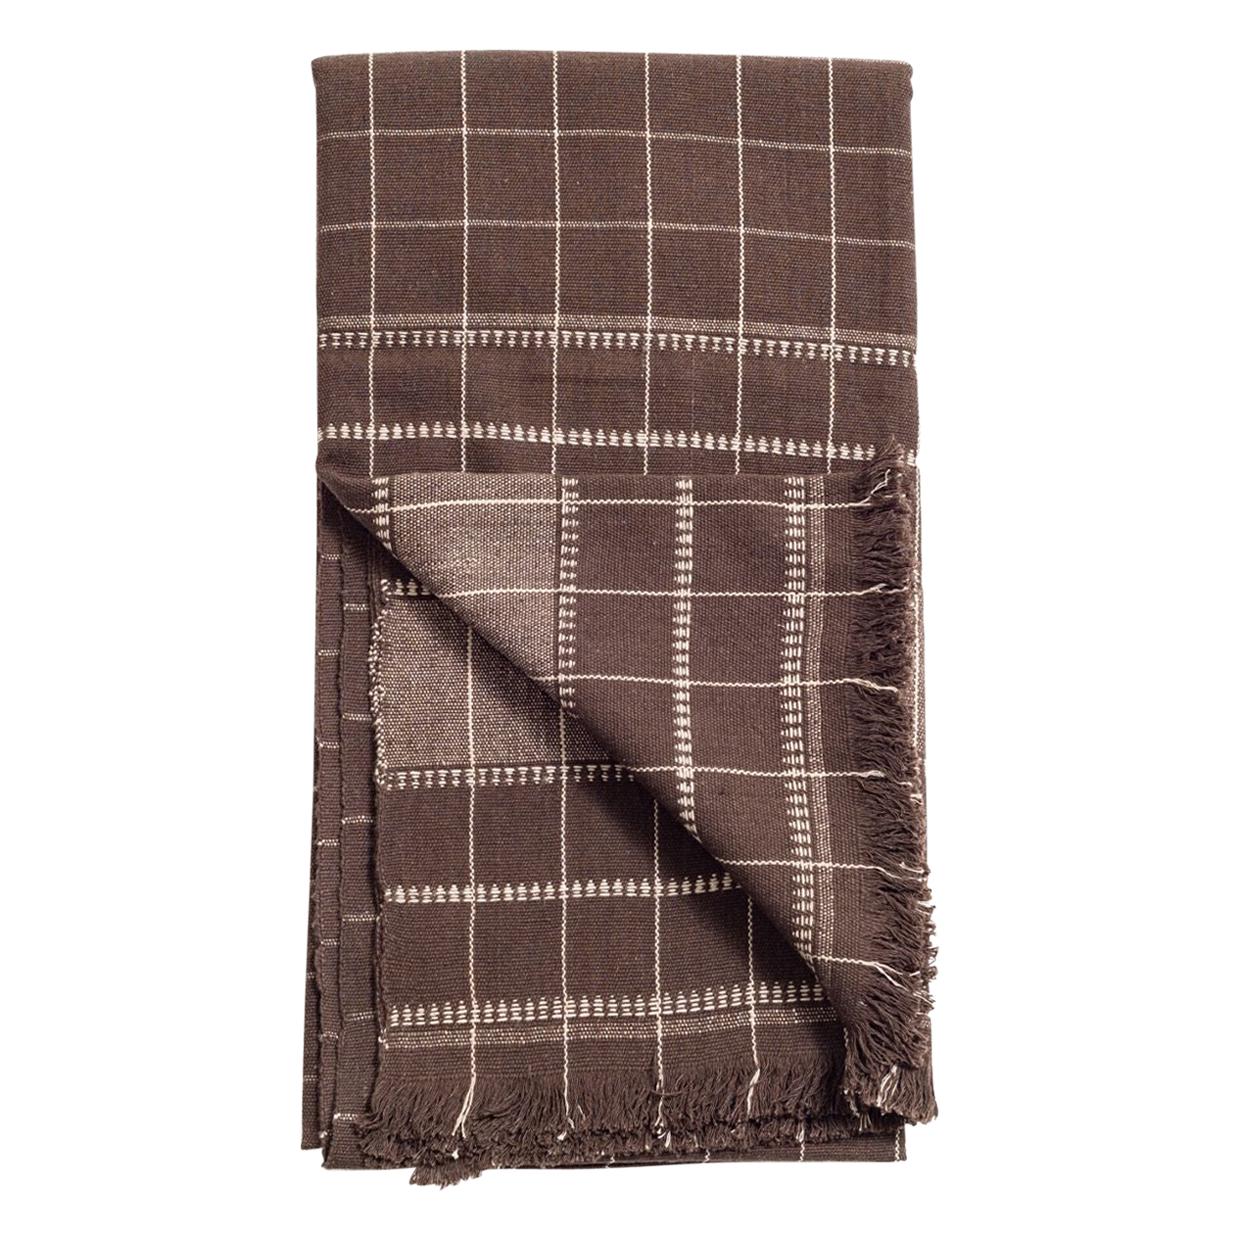 Treacle Brown Handloom Throw / Blanket In Organic Cotton In Checks Pattern